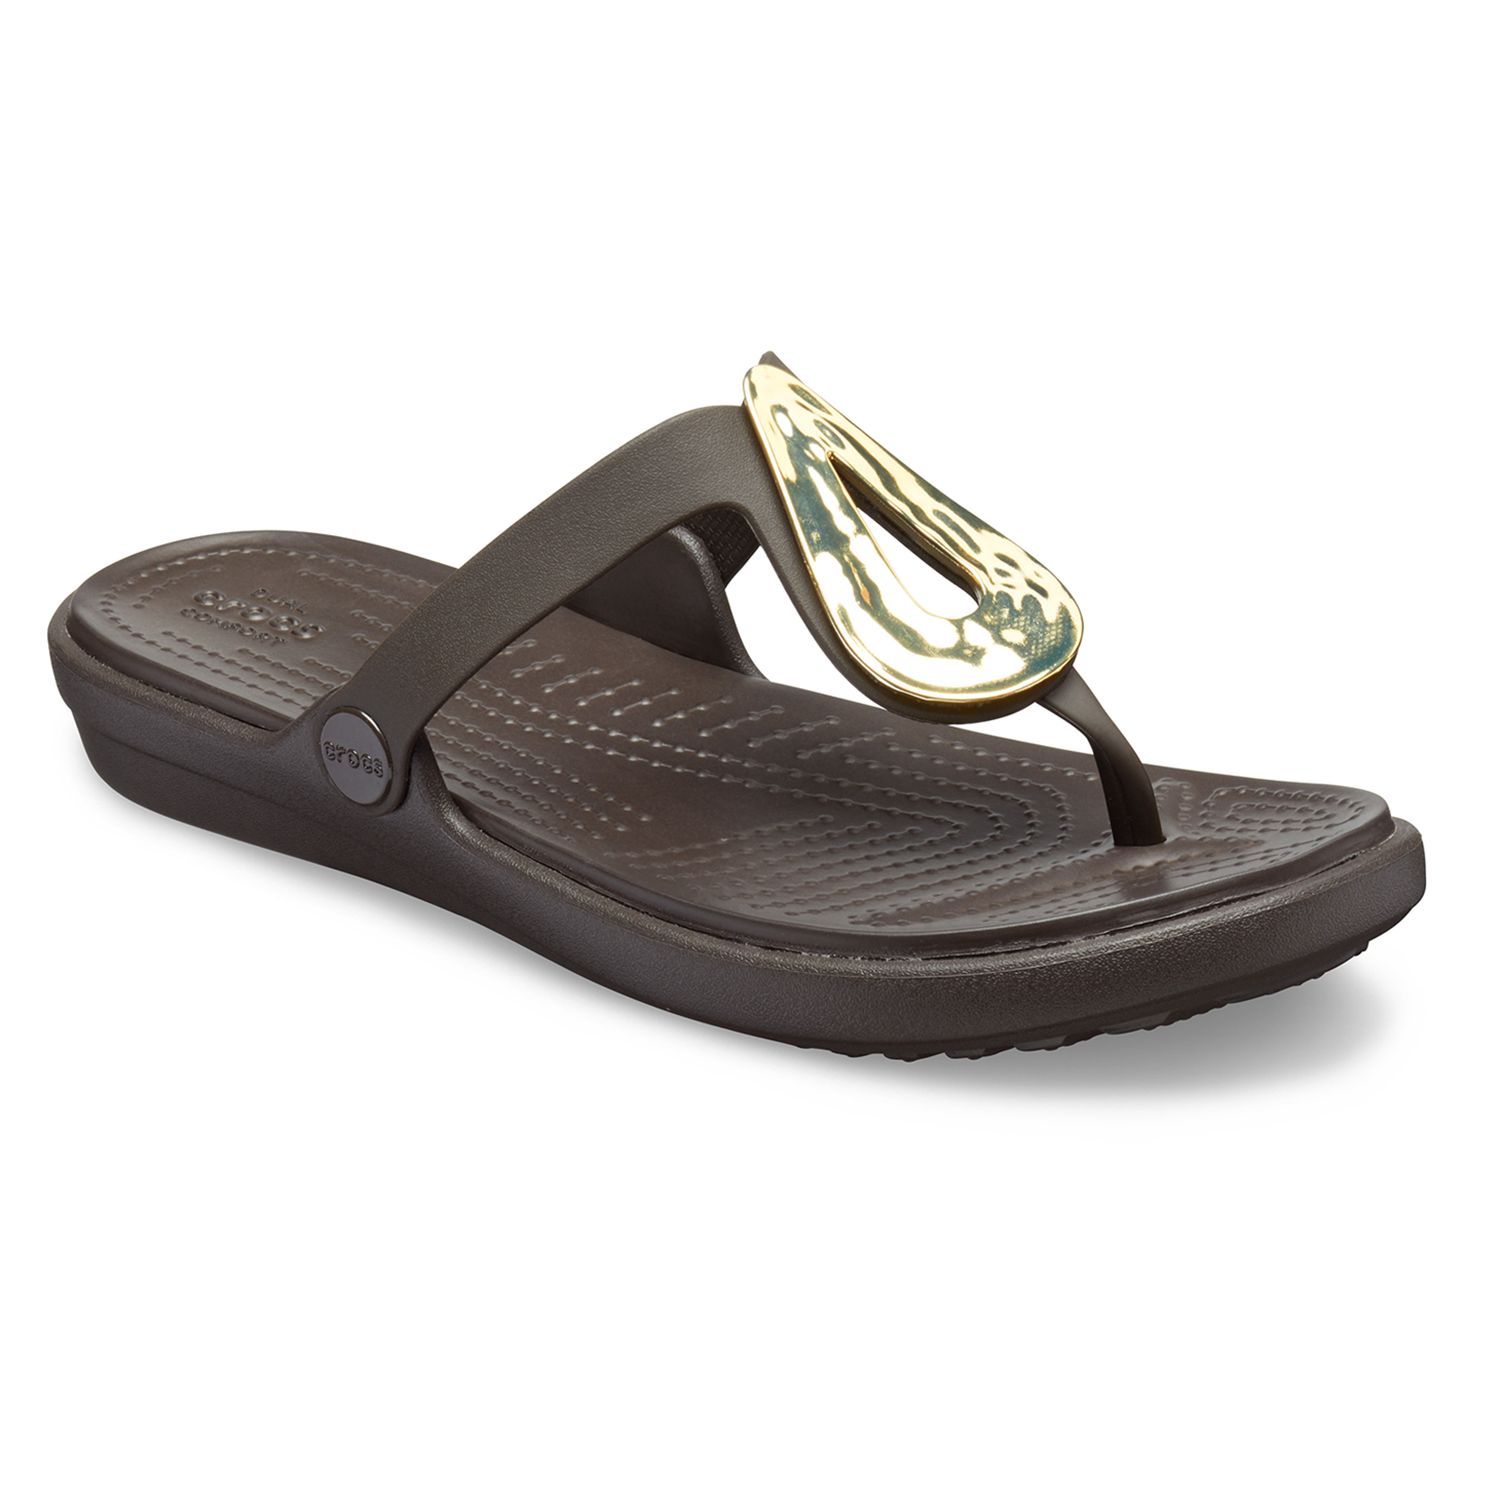 crocs women's sanrah liquid metallic wedge flip sandal